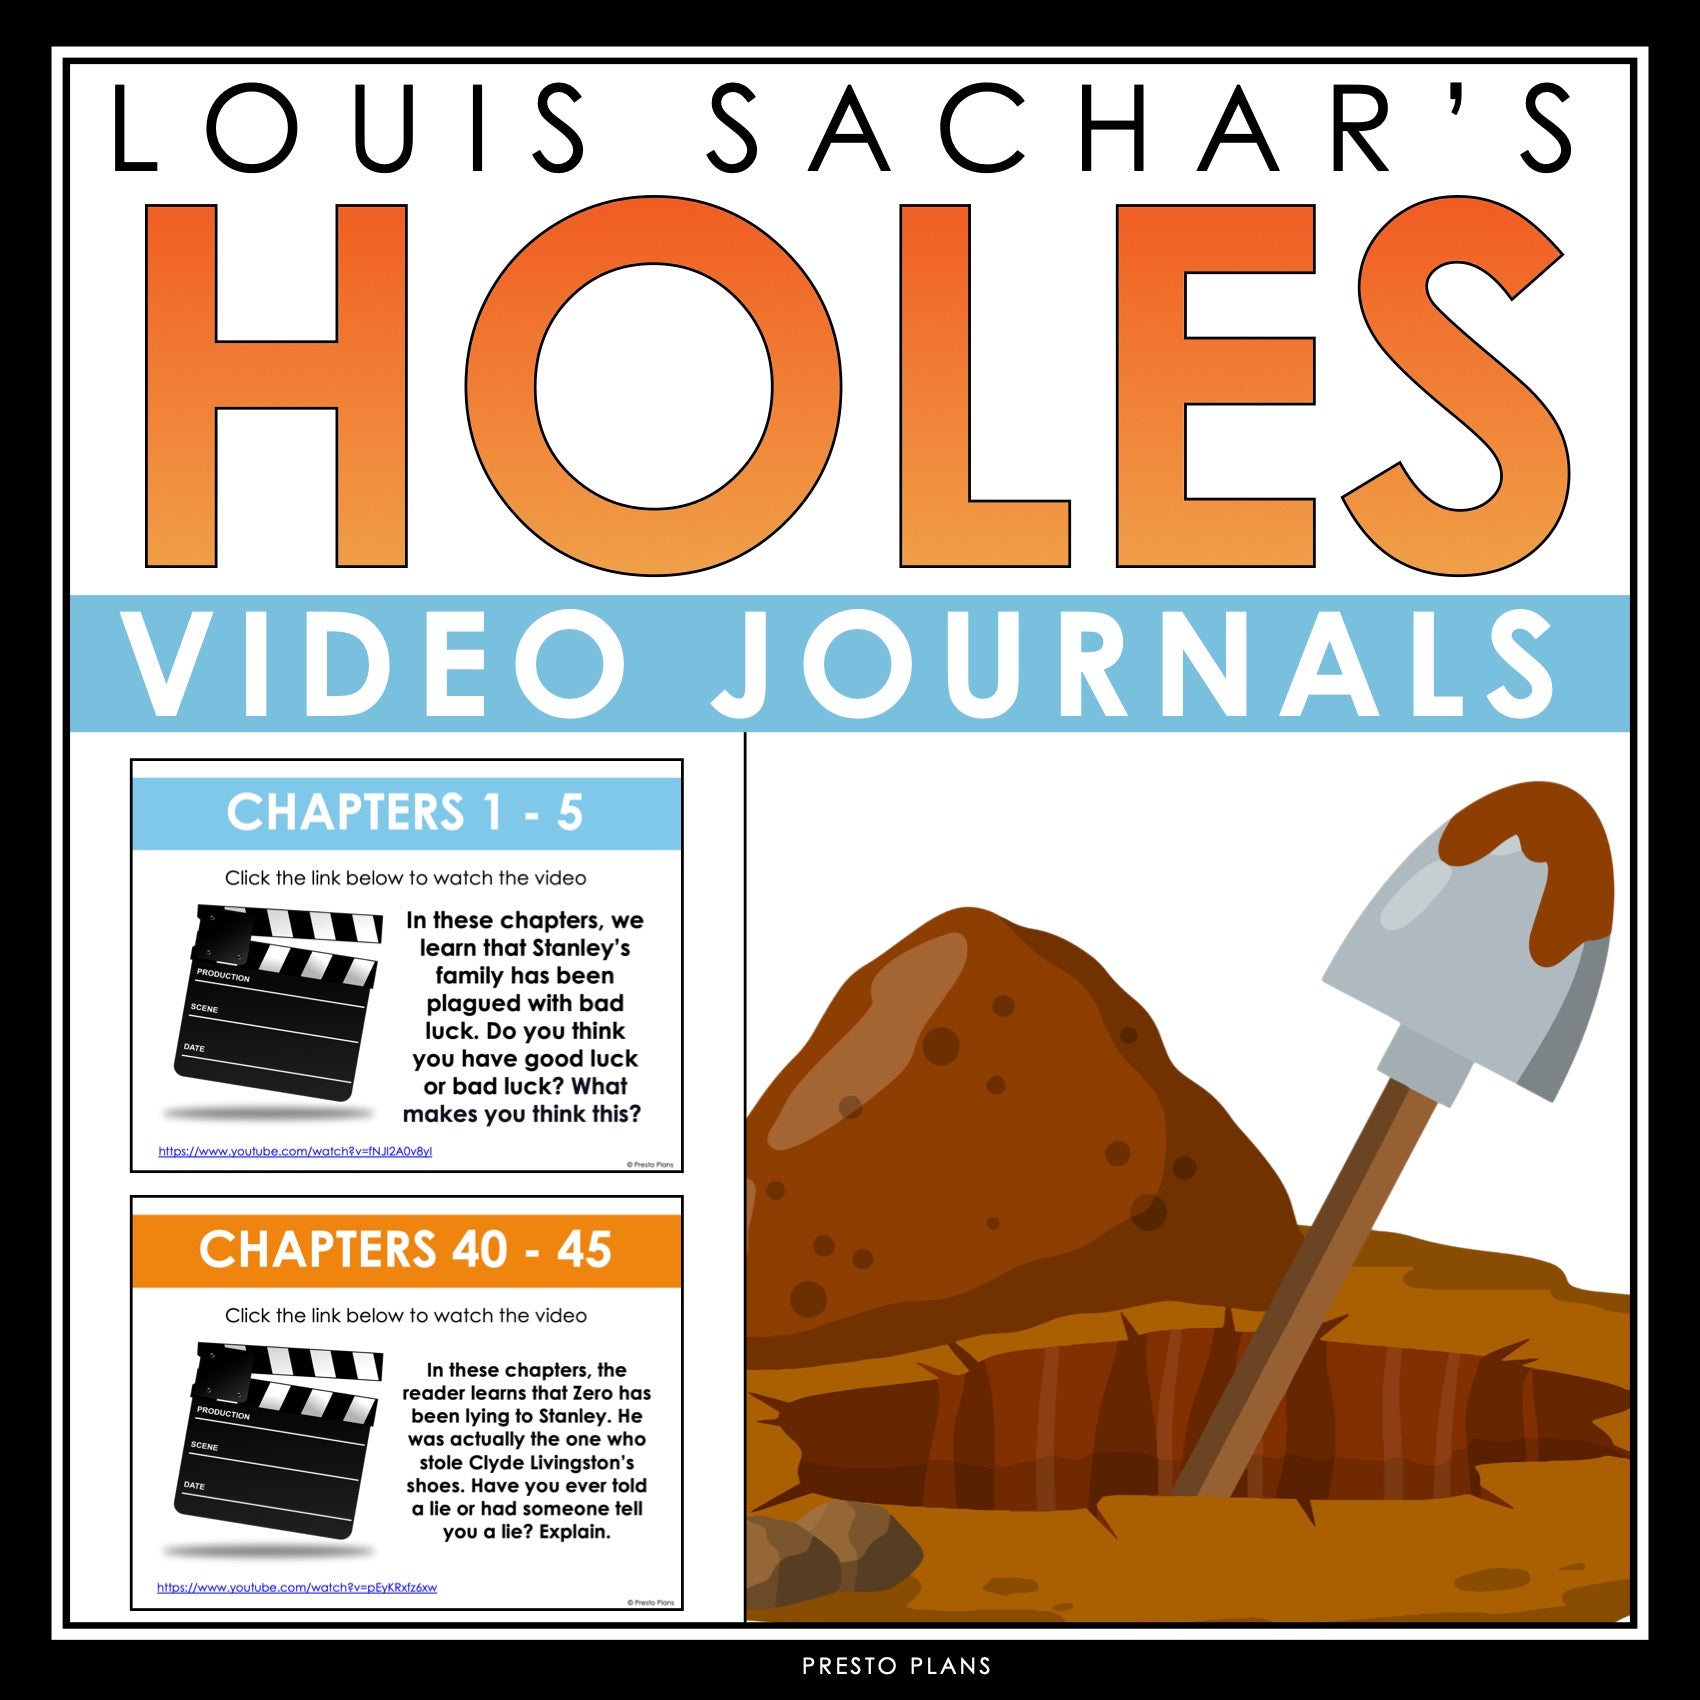 Holes: A Play by Louis Sachar